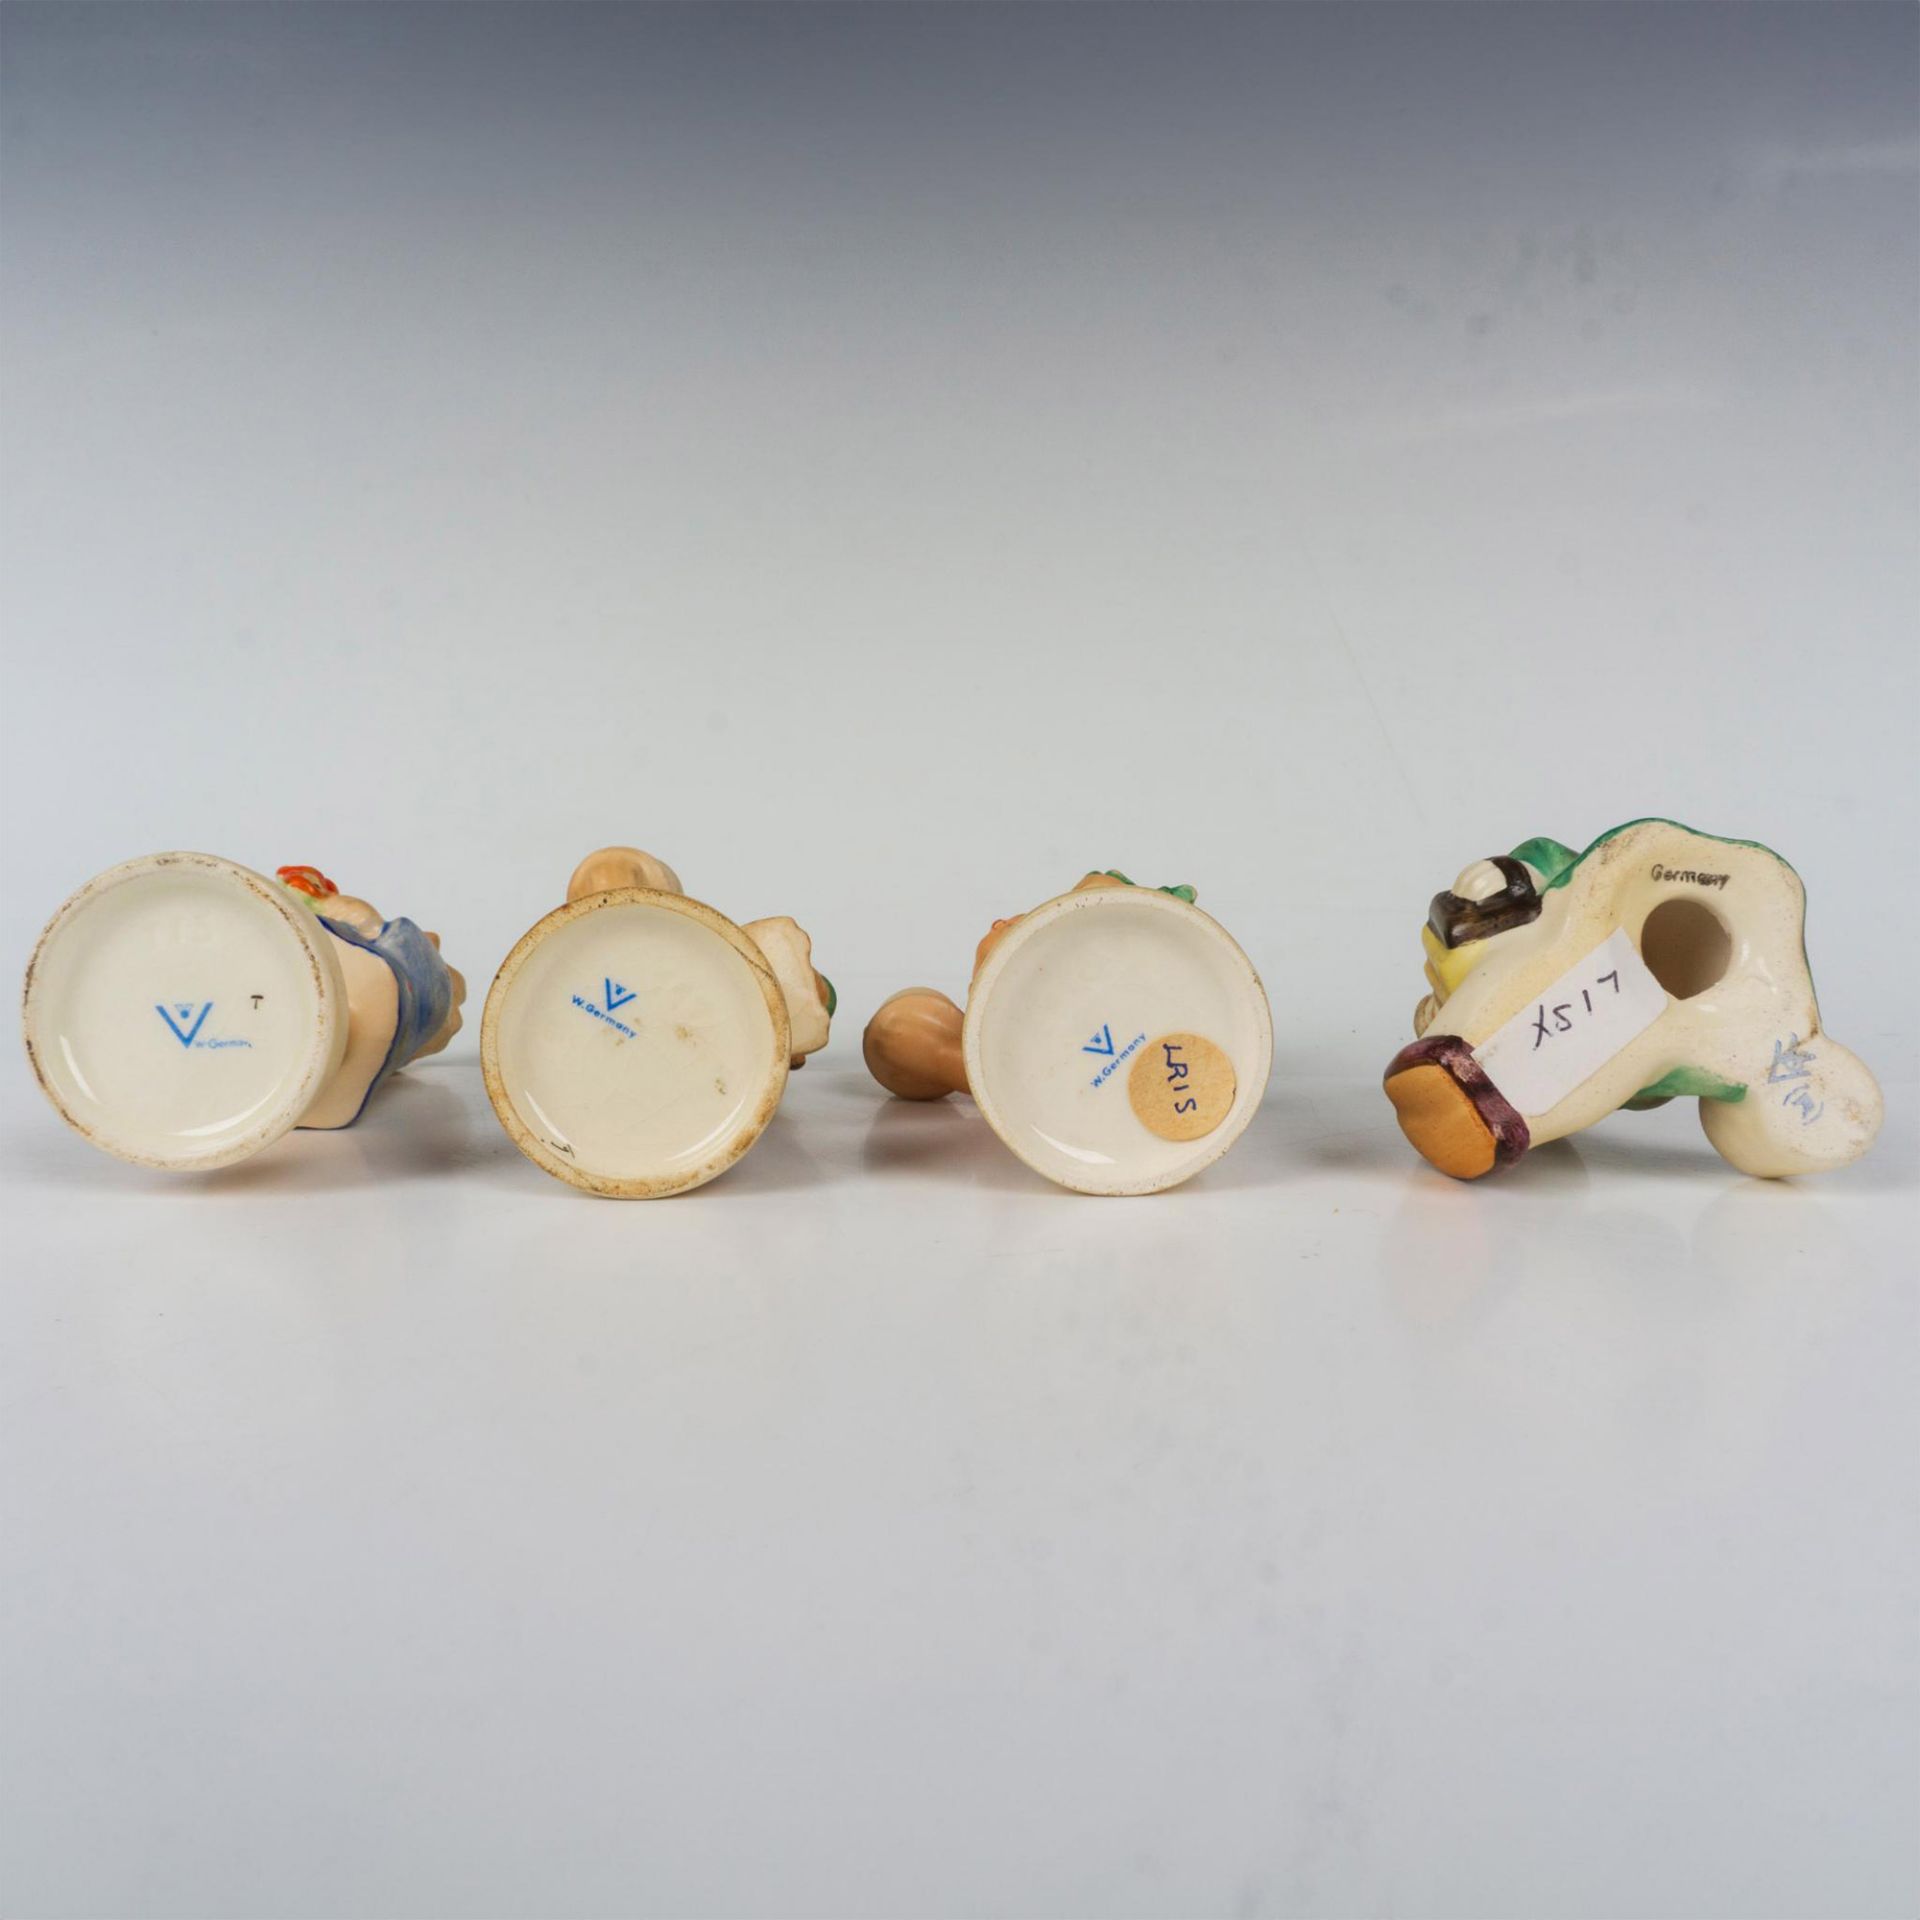 4pc Goebel Hummel Figural Candle Holders - Image 3 of 3